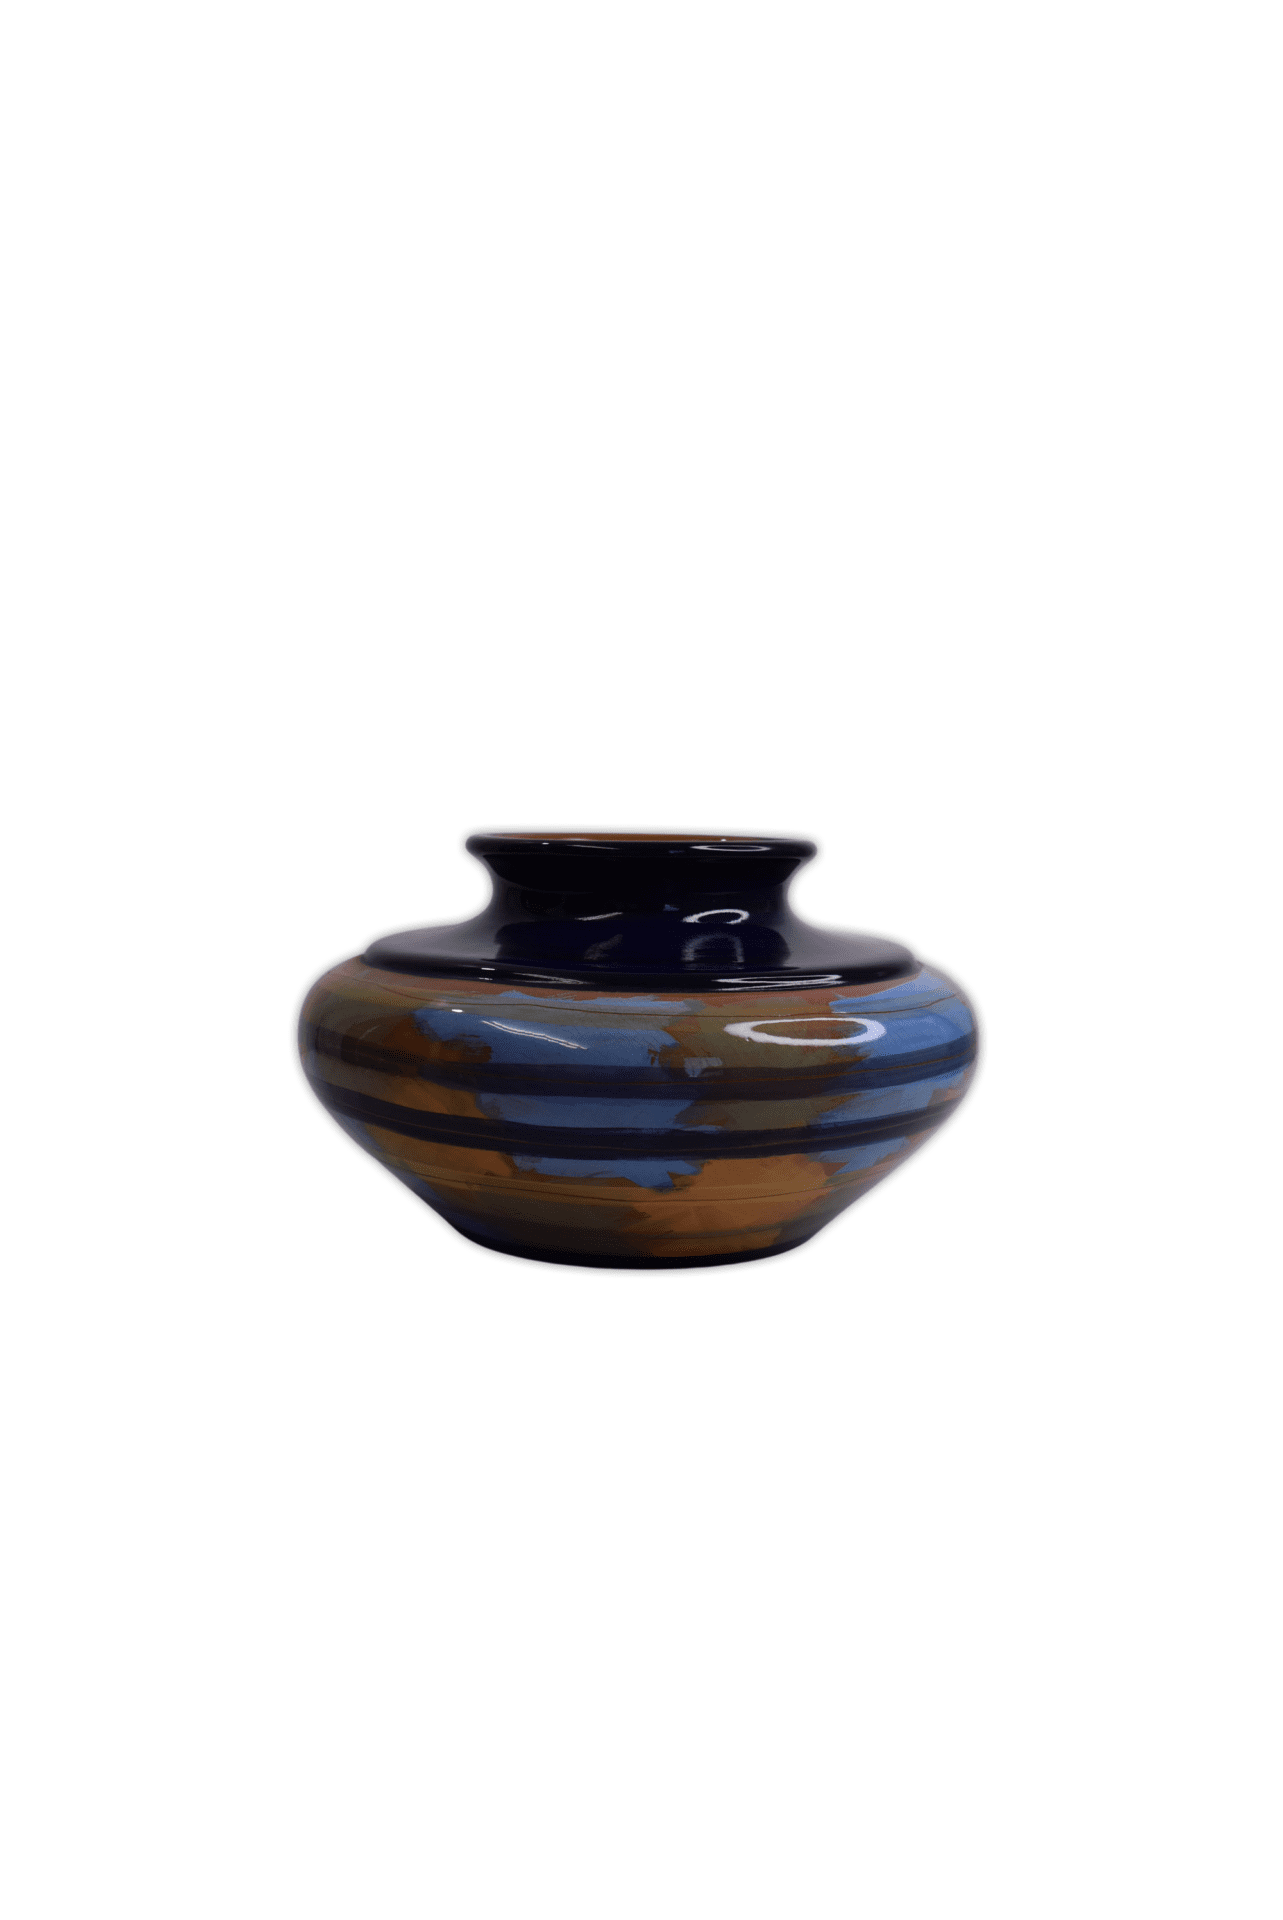 Low vase design with striped multicoloured glaze.